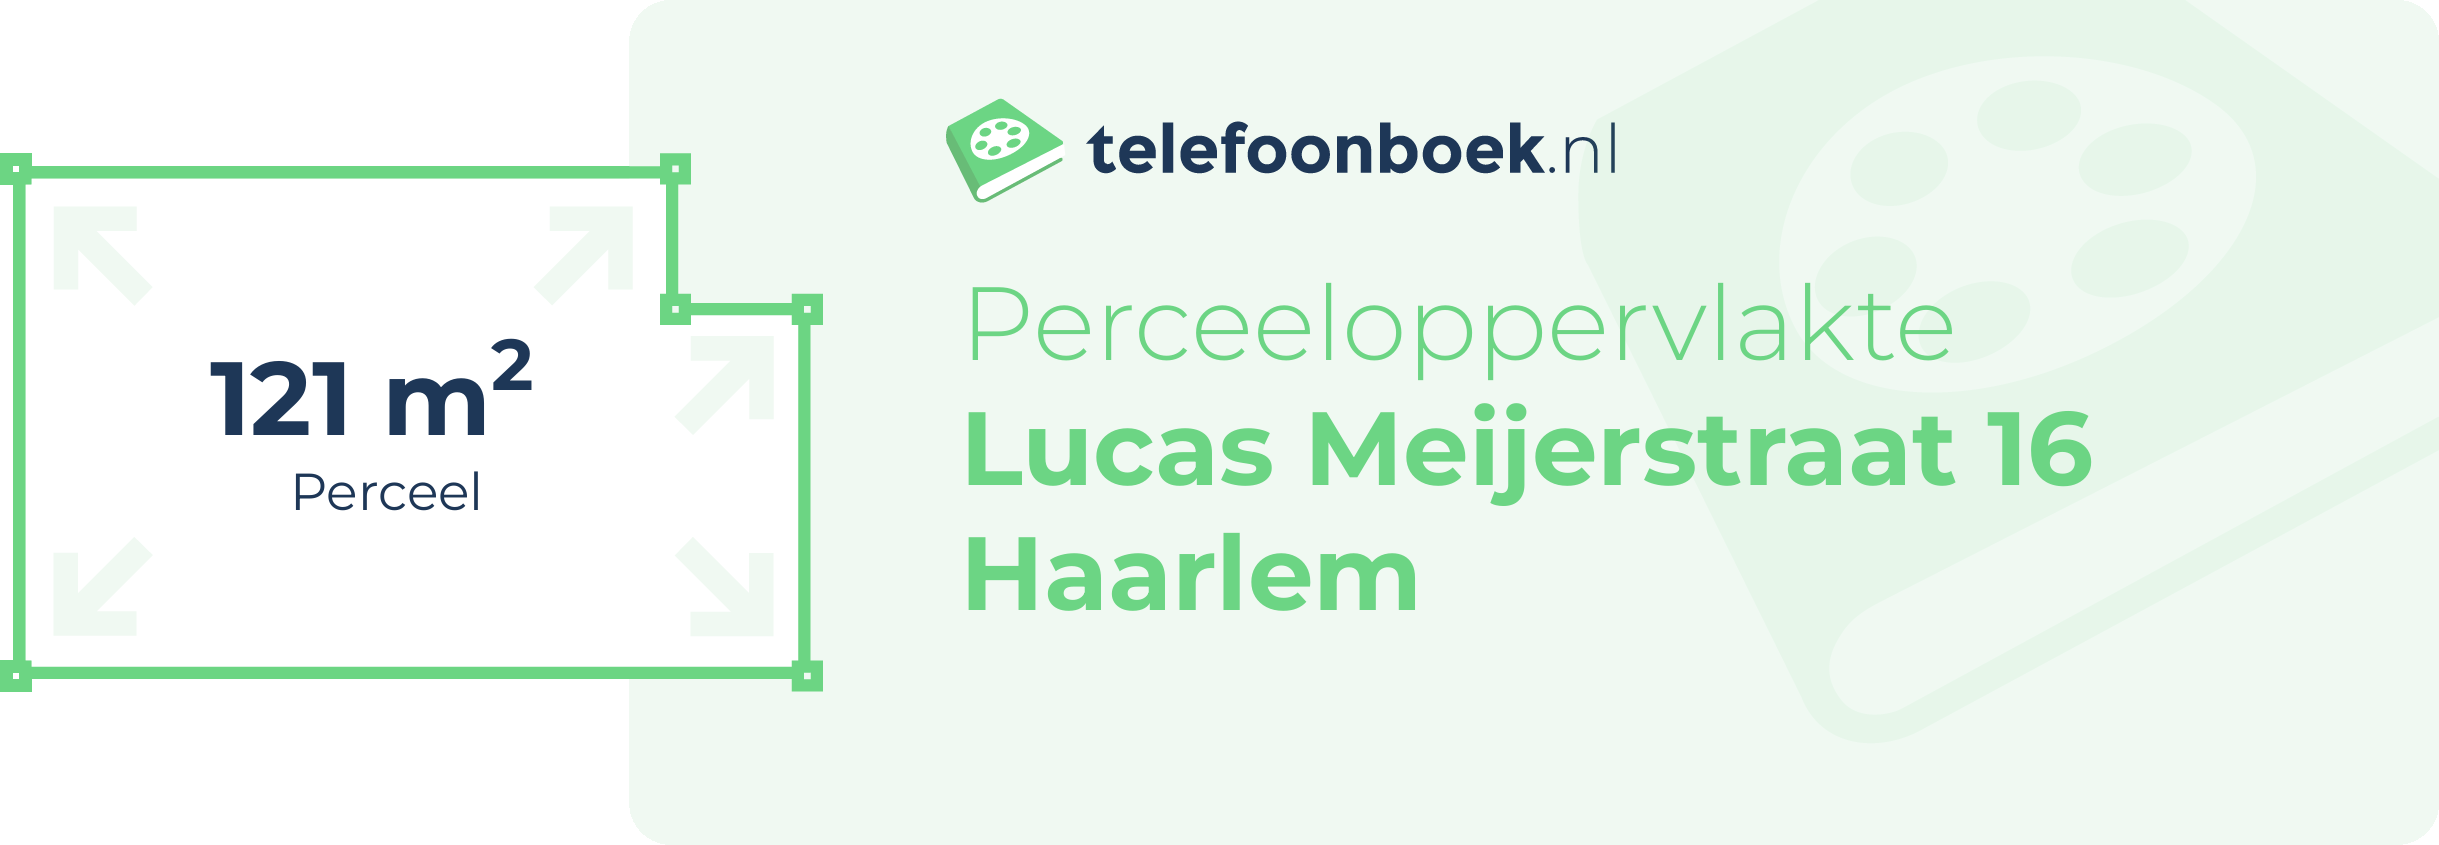 Perceeloppervlakte Lucas Meijerstraat 16 Haarlem